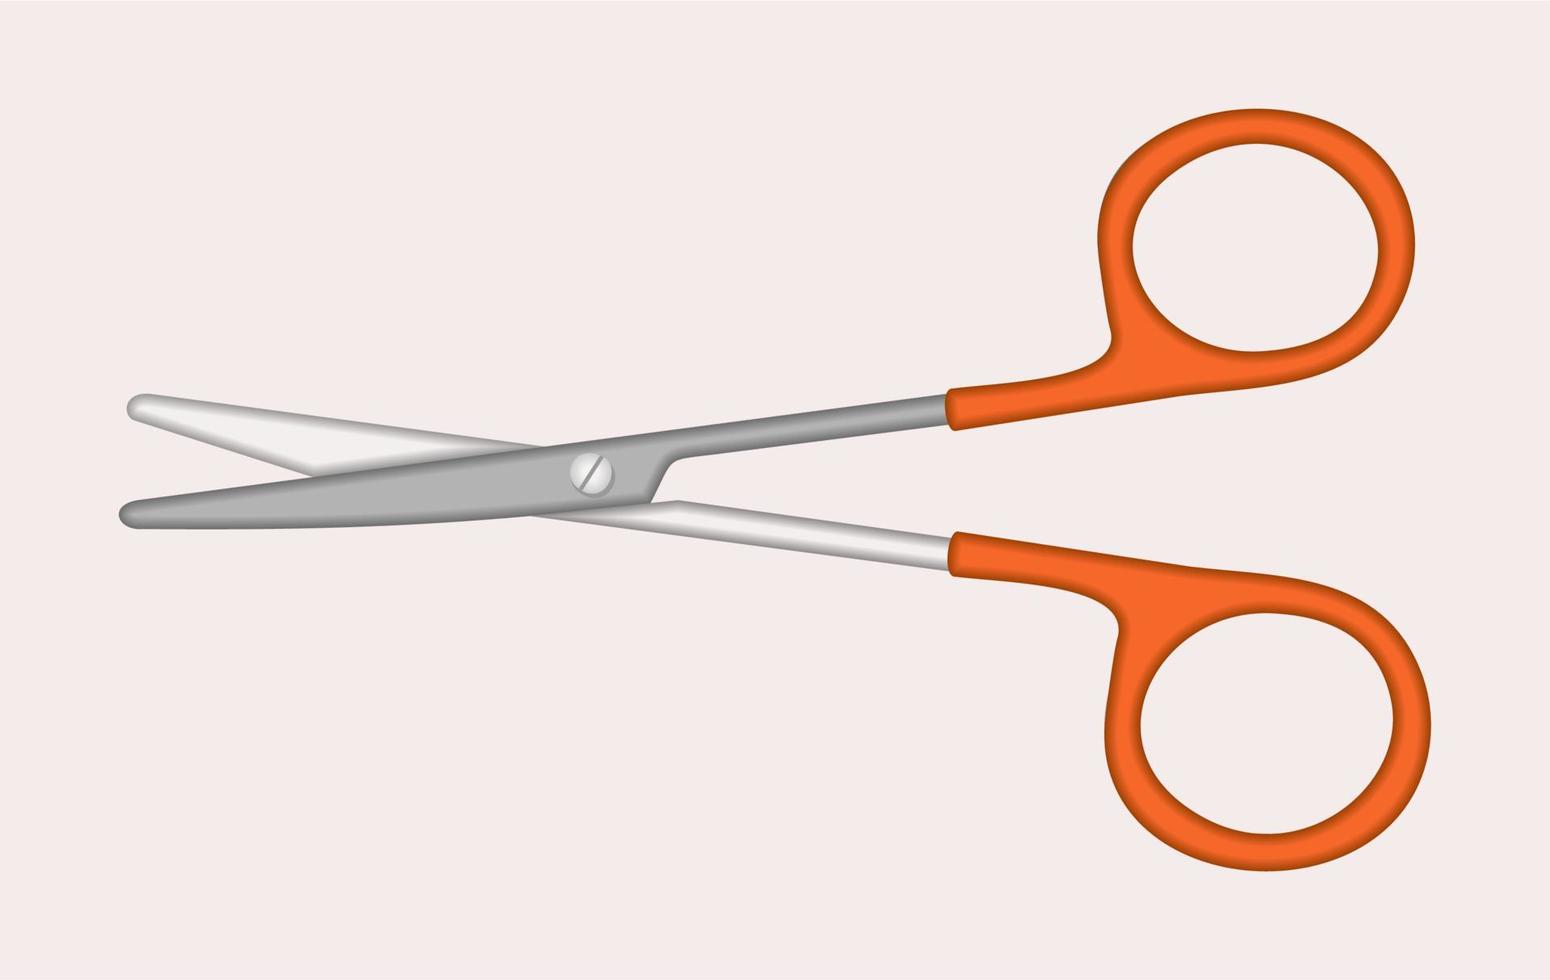 Scissors with orange handles. Vector isolated illustration.